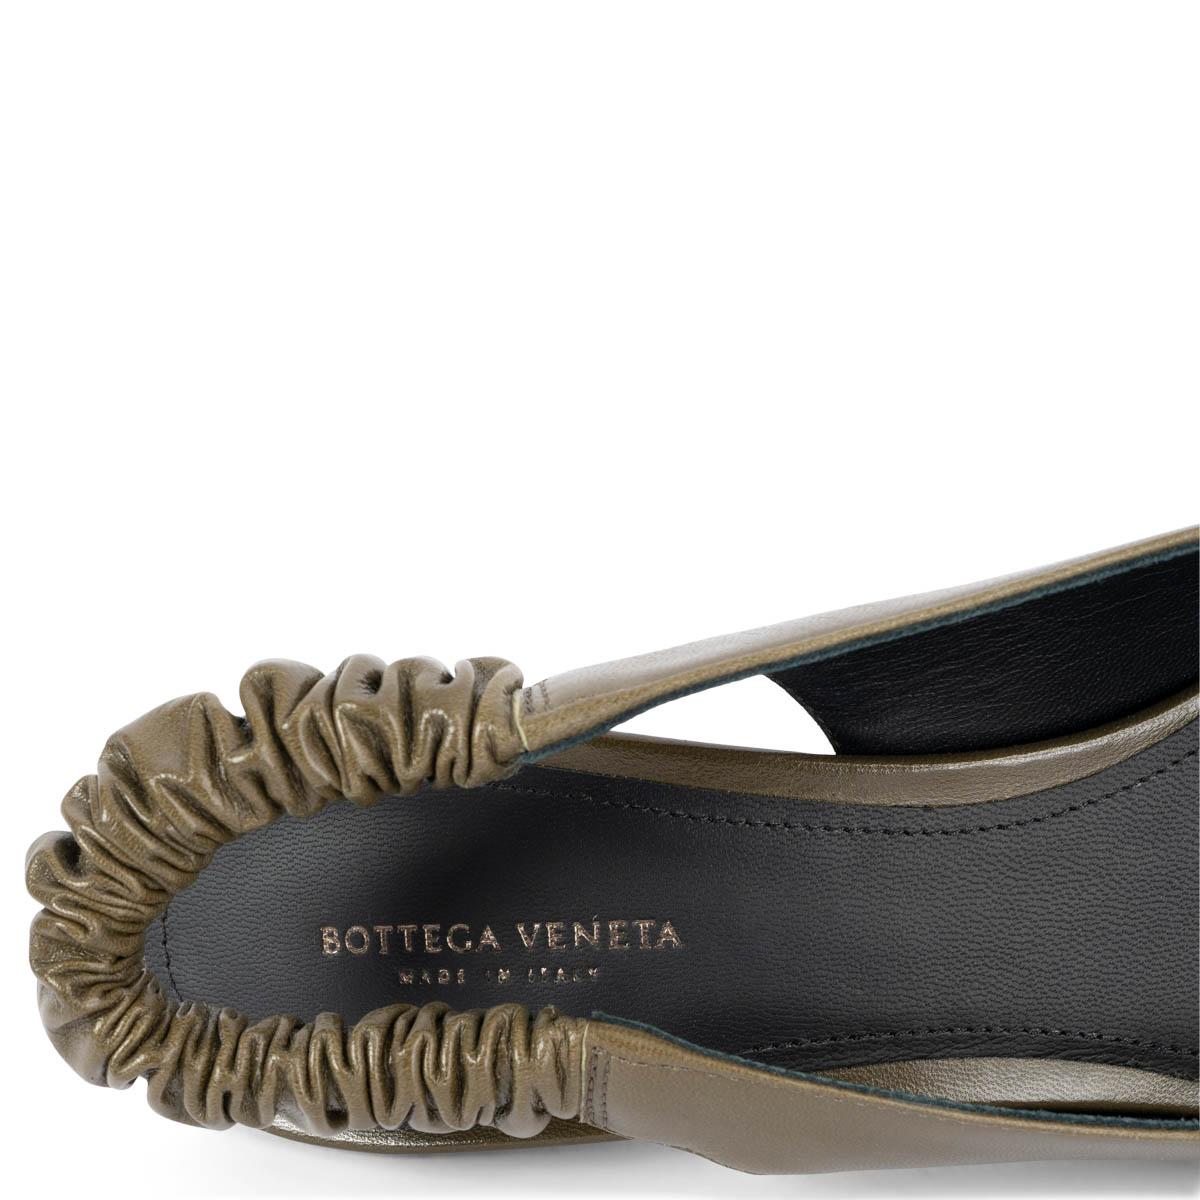 Women's BOTTEGA VENETA olive green leather POINTED TOE Slingbacks Shoes 39